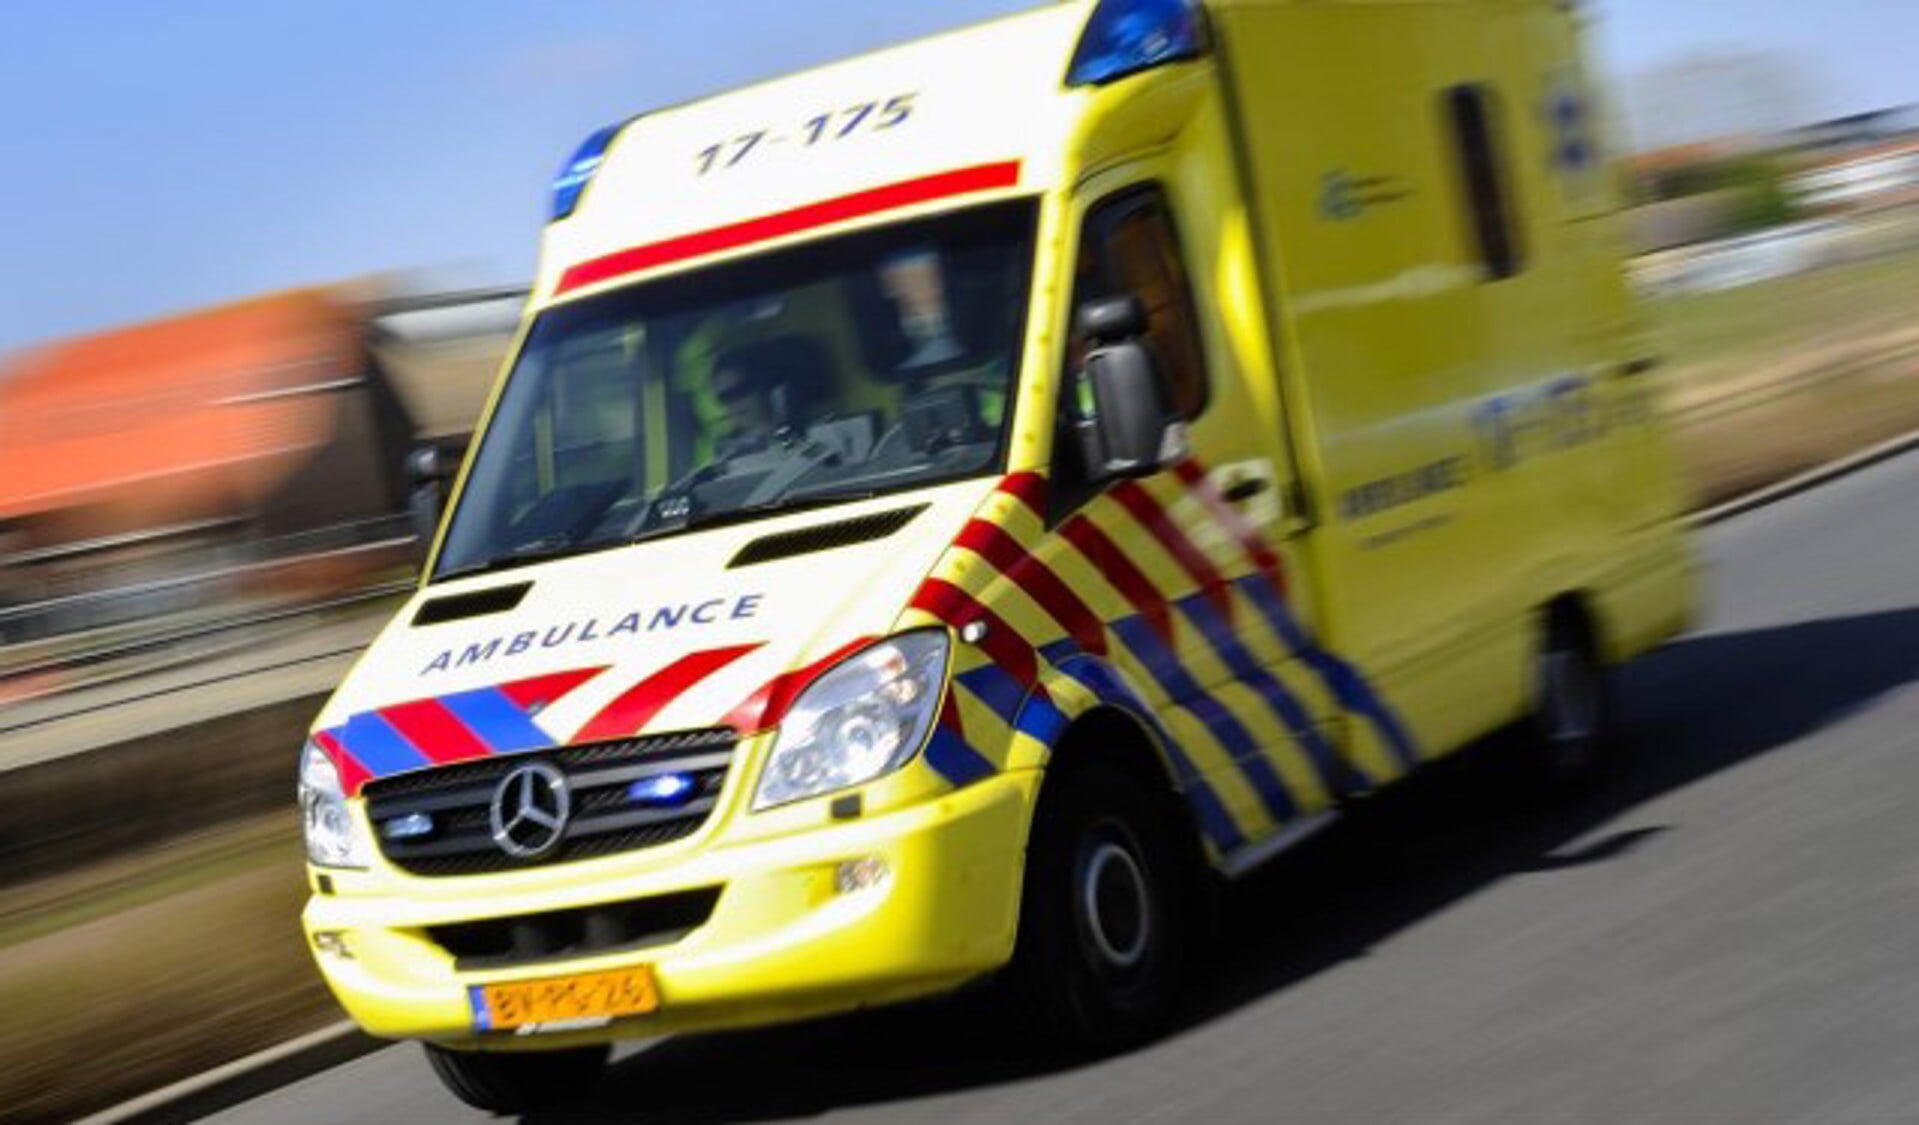 VVD Gennep pleit voor terugkeer van ambulancepost in Gennep. 